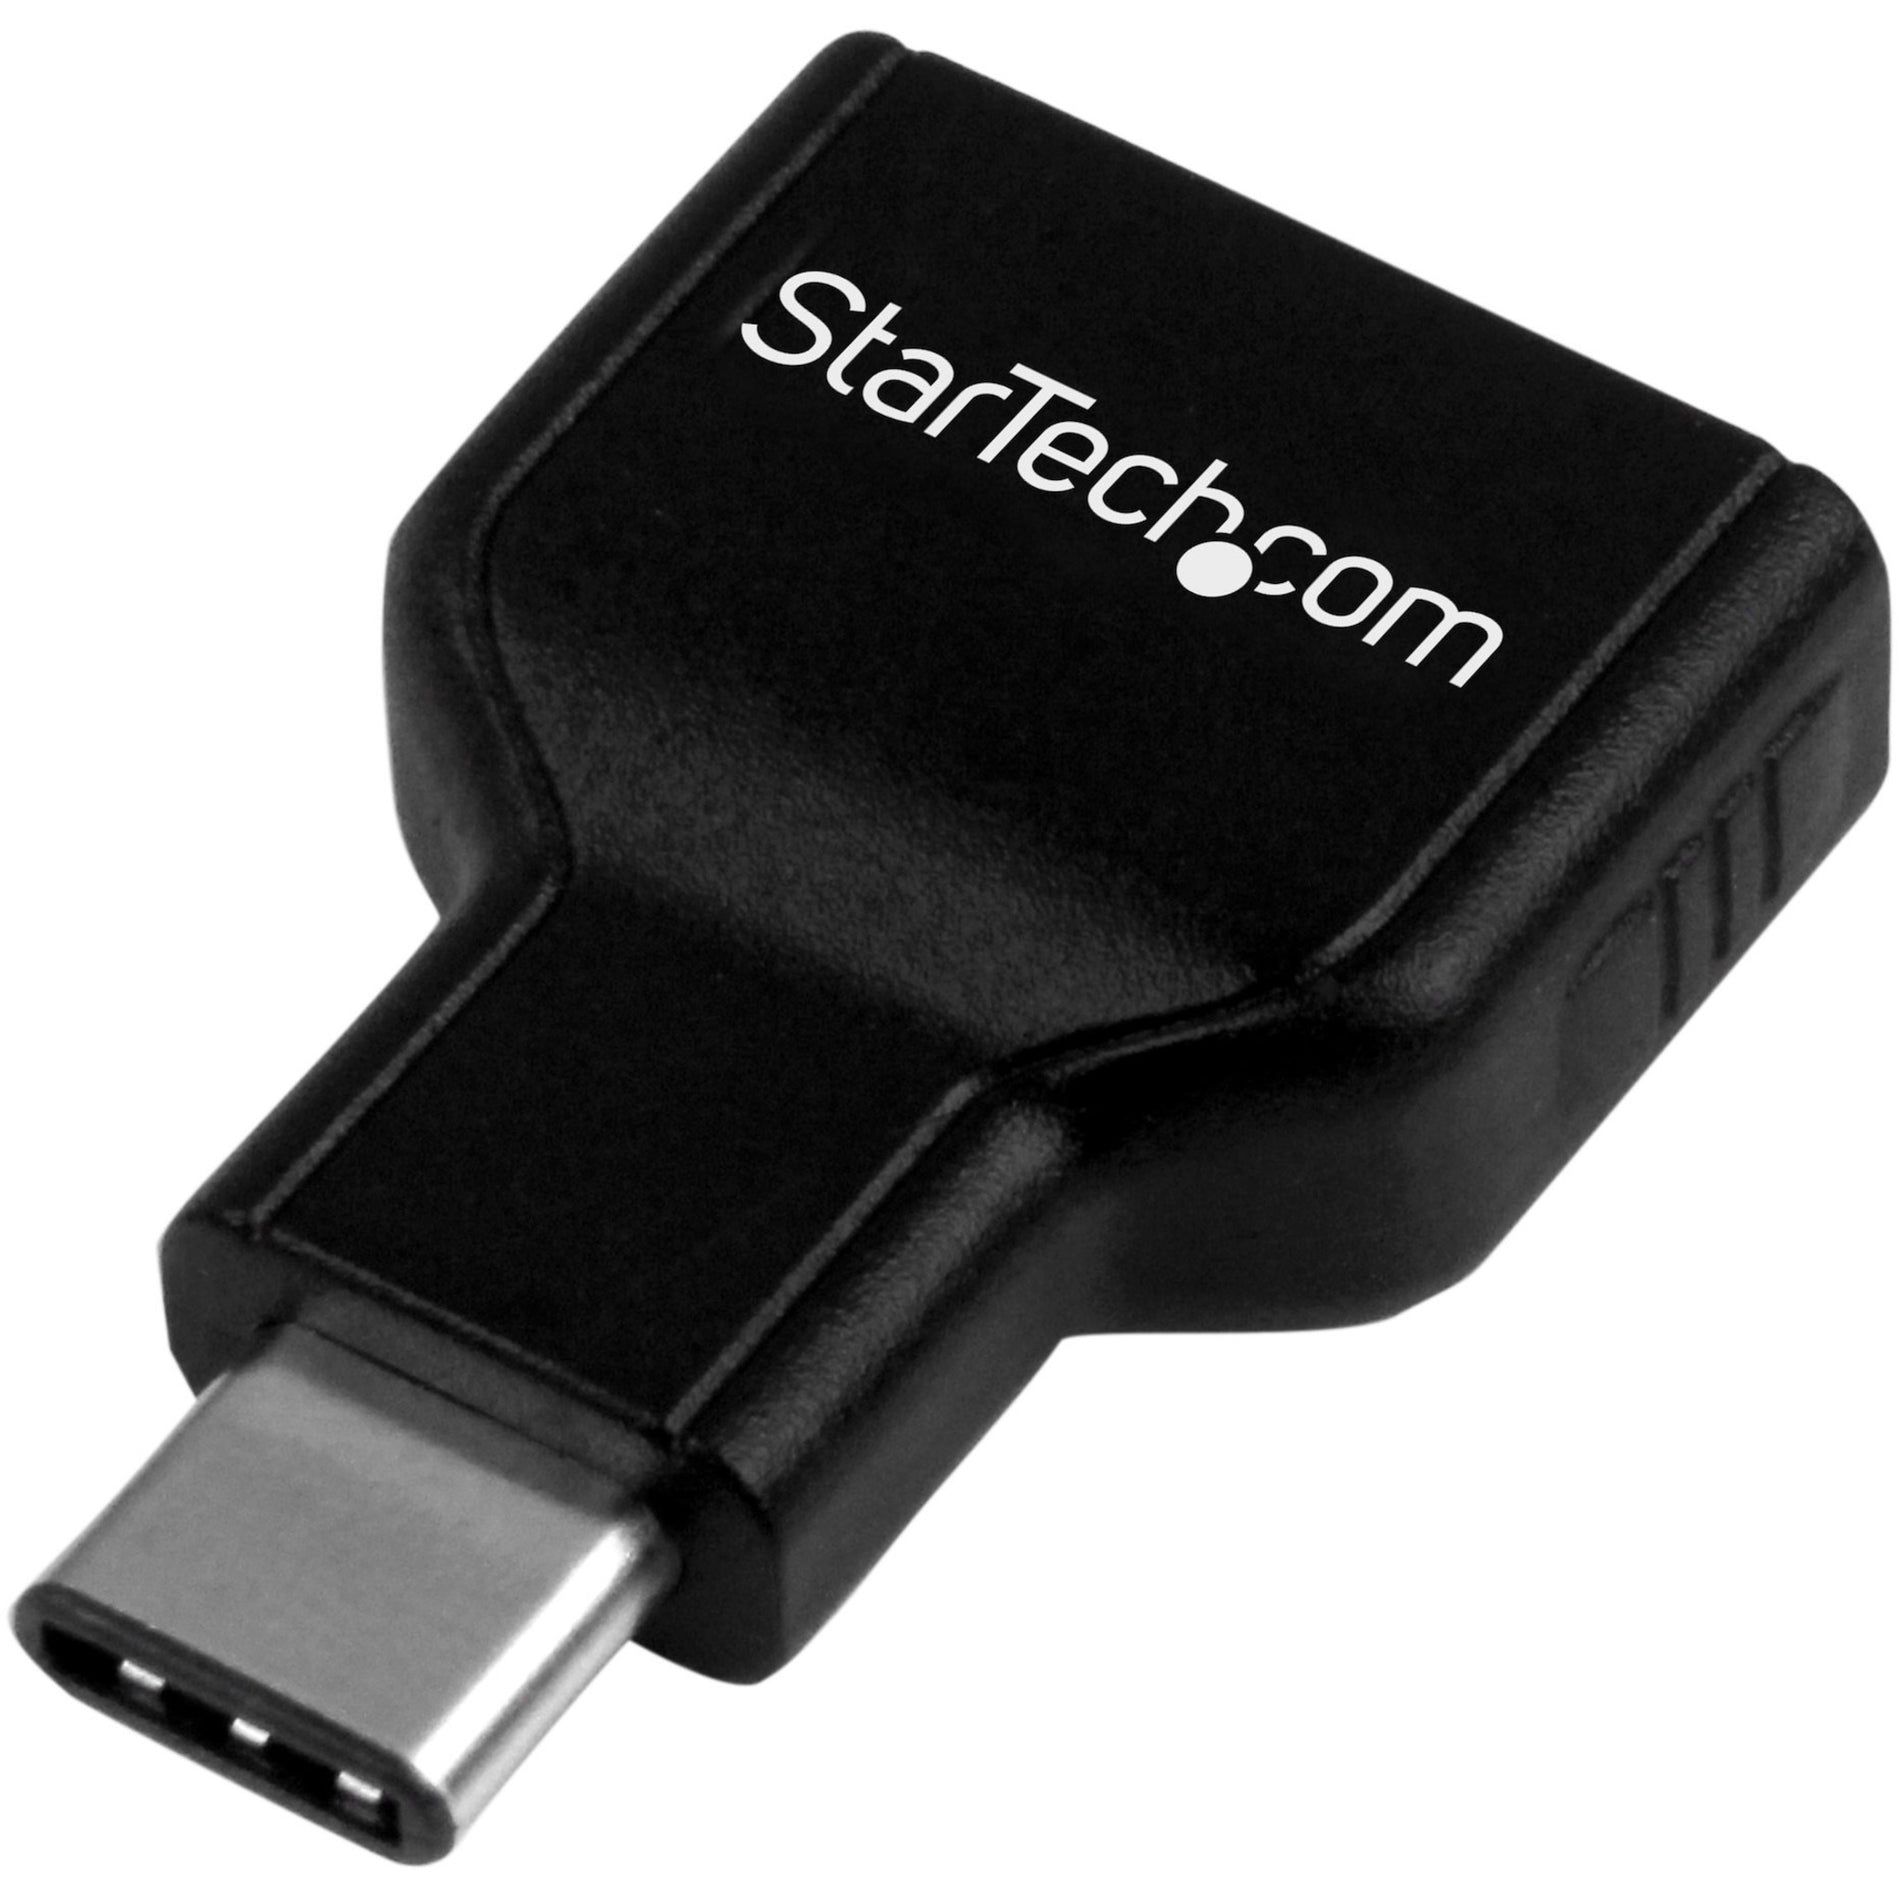 StarTech.com -> スターテック USB31CAADG -> USB-C to USB-A アダプター M/F - USB 3.0 Connect -> 接続 USB C -> USB C laptops -> ノートパソコン Apple MacBook -> Apple MacBook Chromebook Pixel -> Chromebook Pixel more -> 他